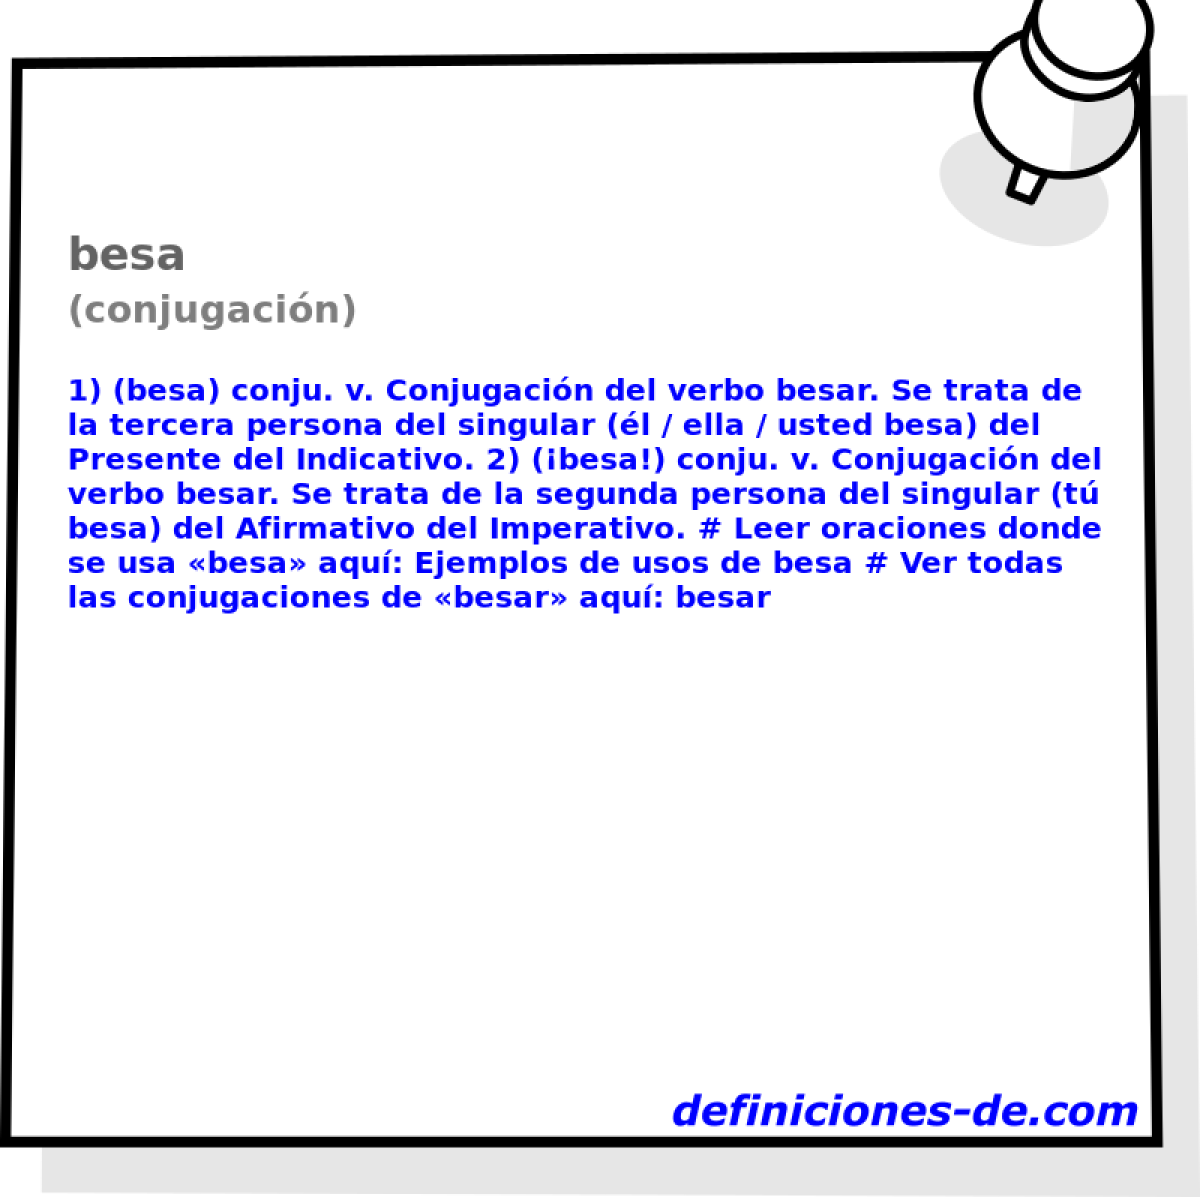 besa (conjugacin)